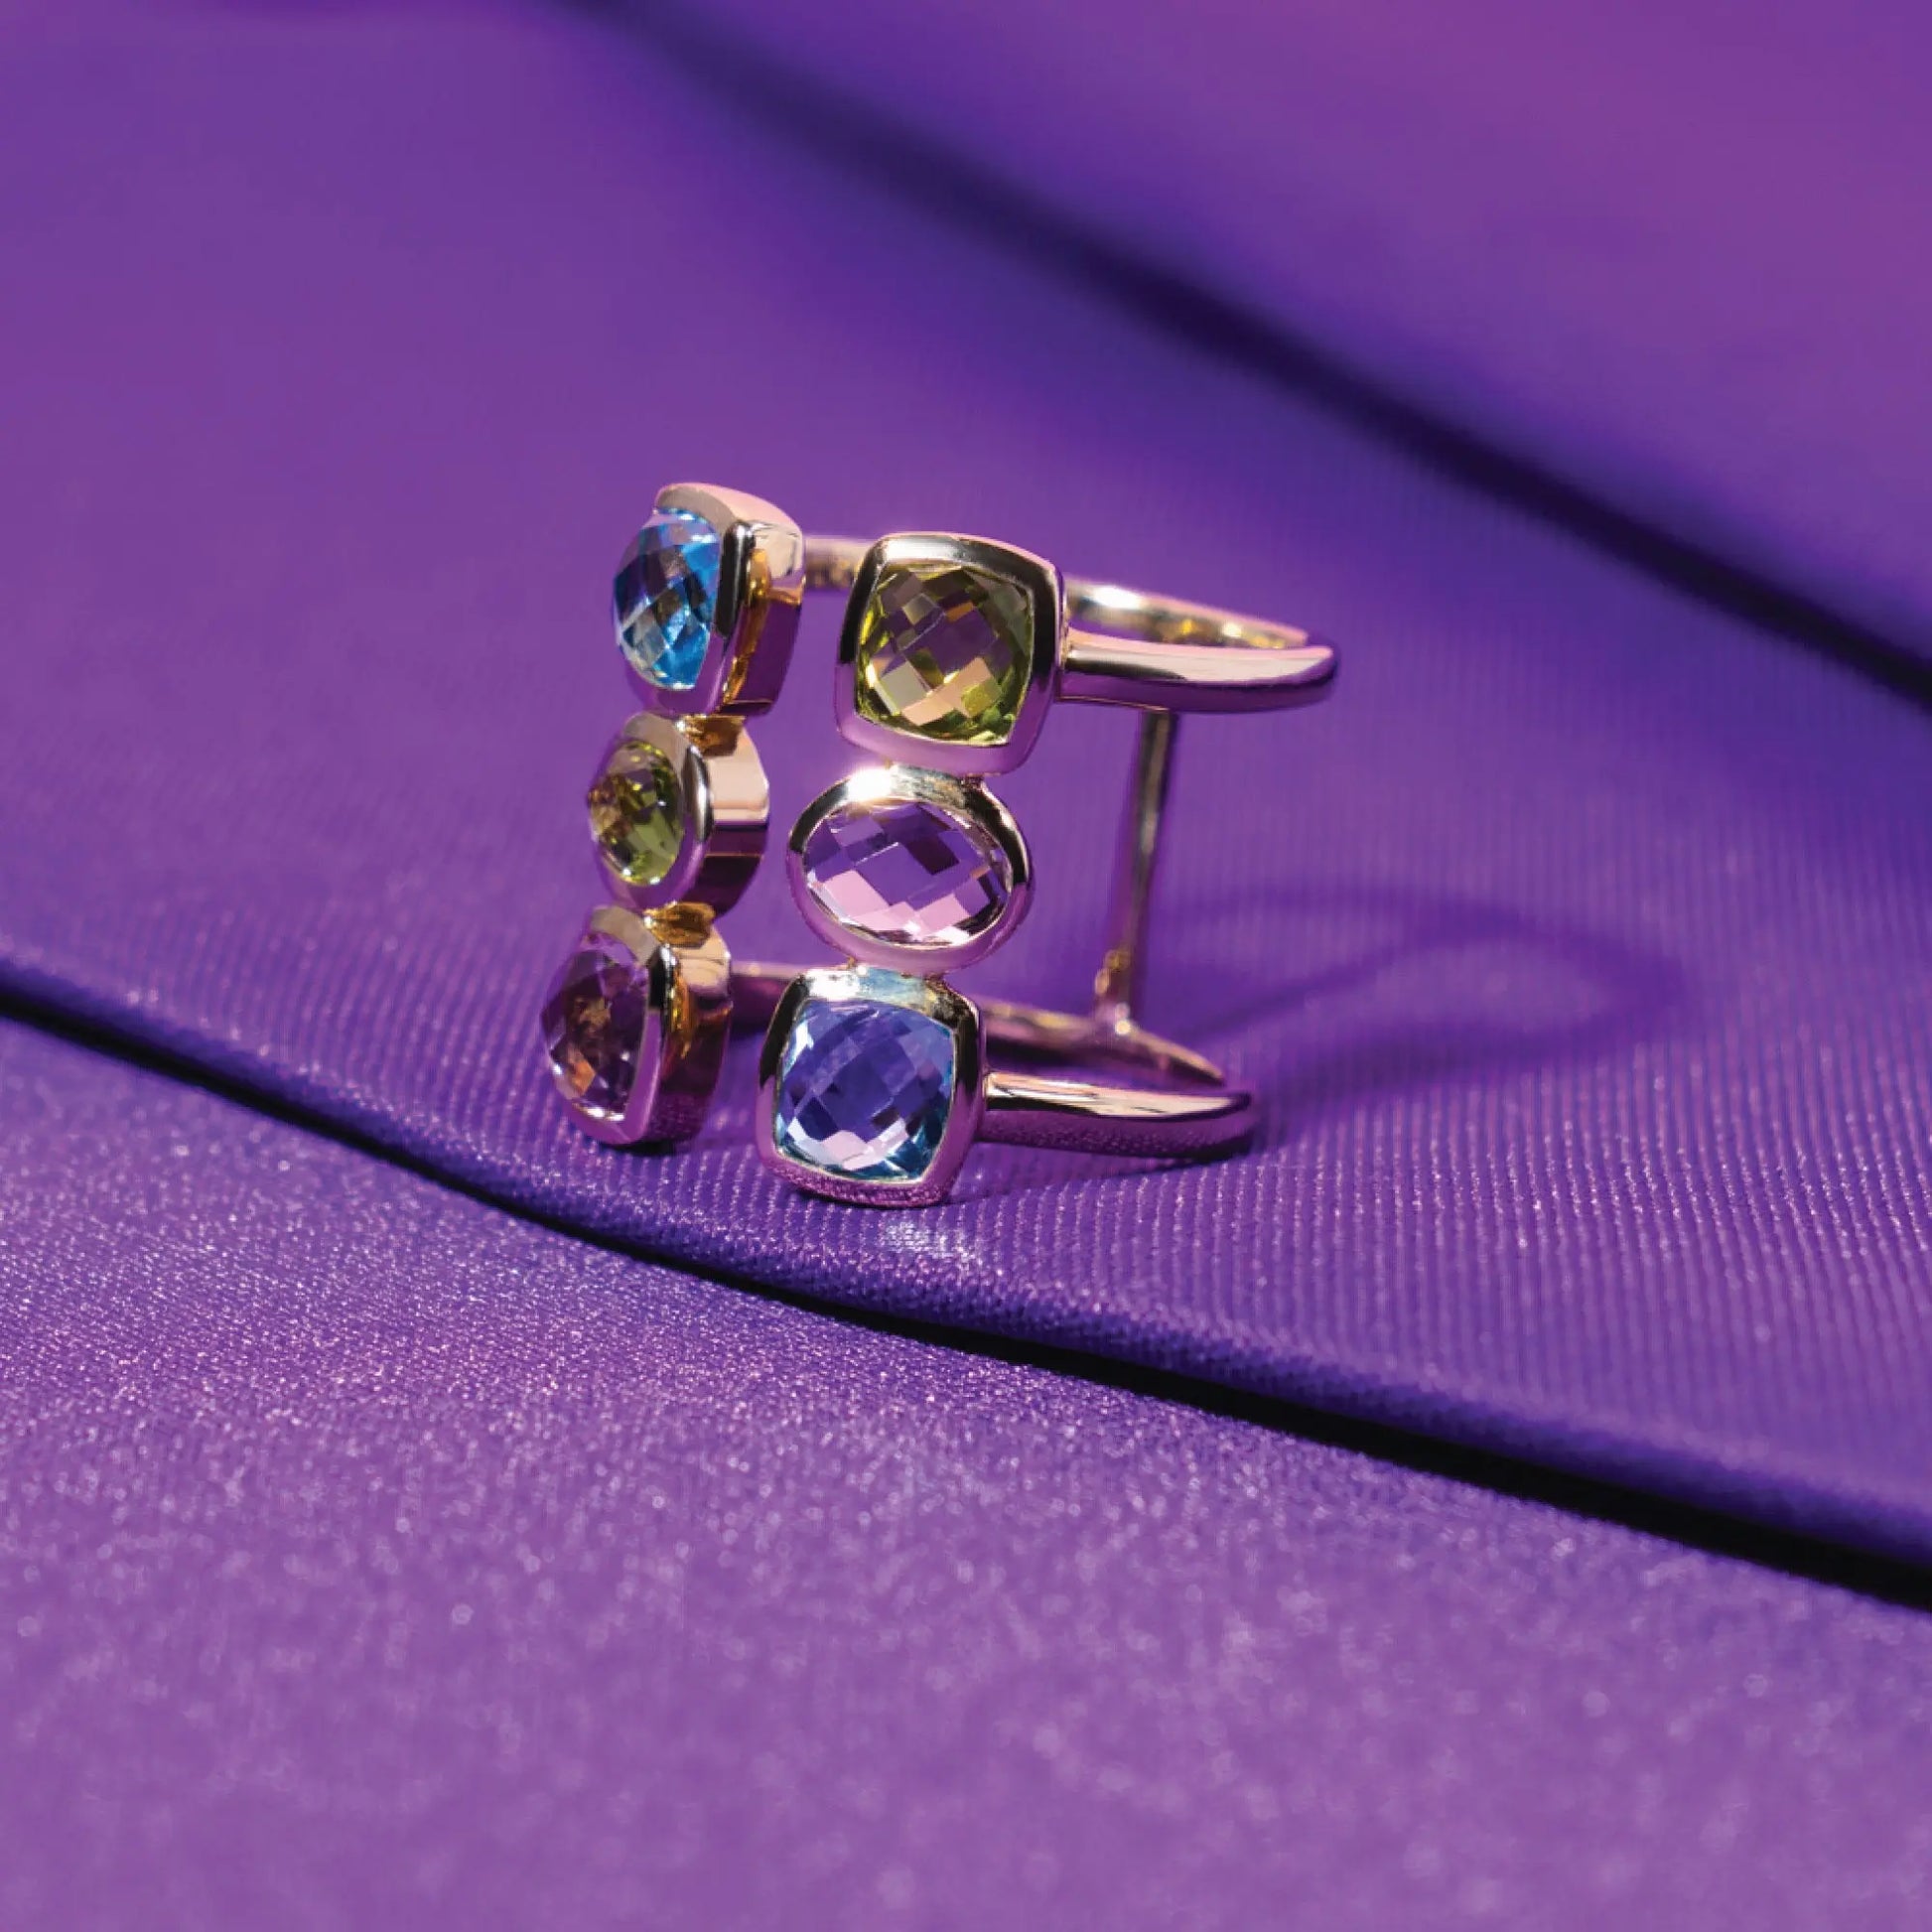 Melina Multi-gemstone Ring Jewelmak Shop